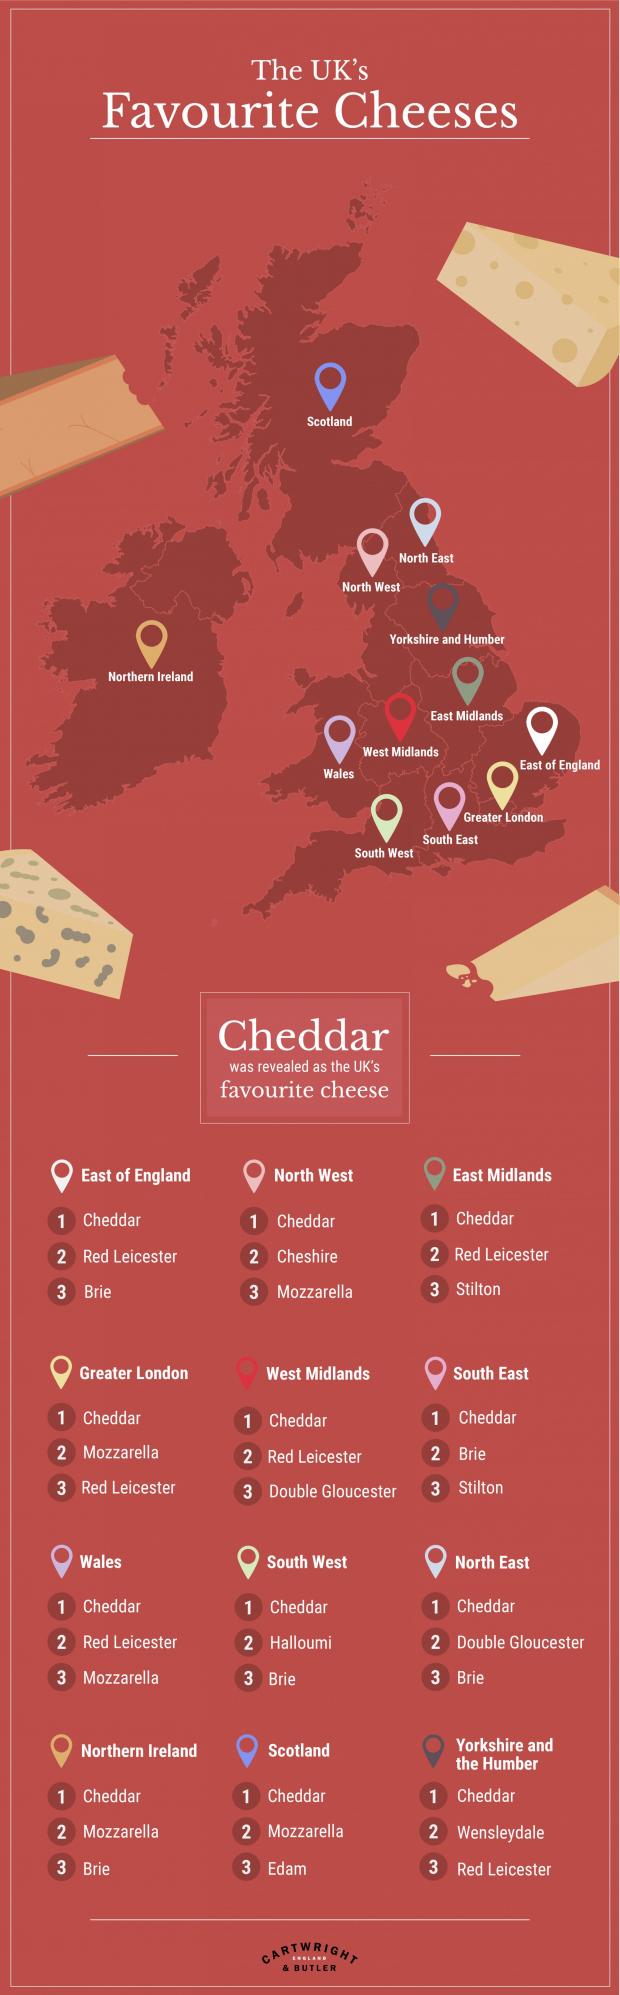 Gazette & Herald: UK's favourite cheeses. Credit: Cartwright & Butler